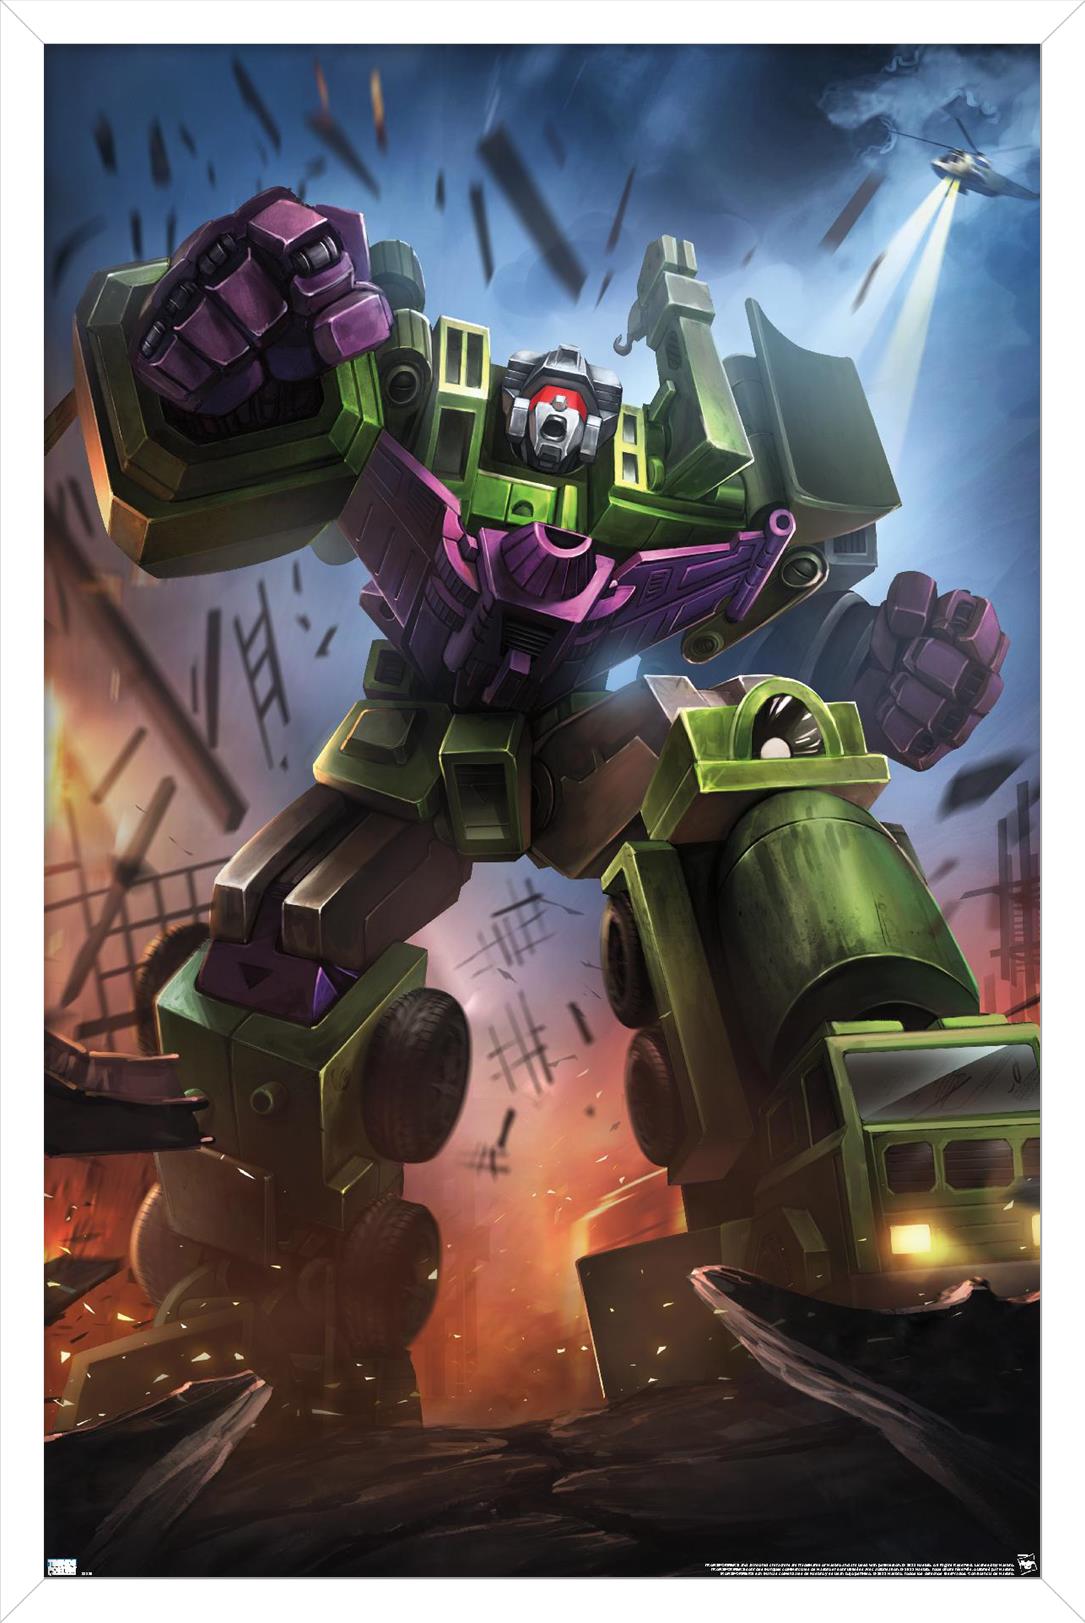 Hasbro Transformers - Devastator Wall Poster, 14.725" x 22.375" Framed - image 1 of 6